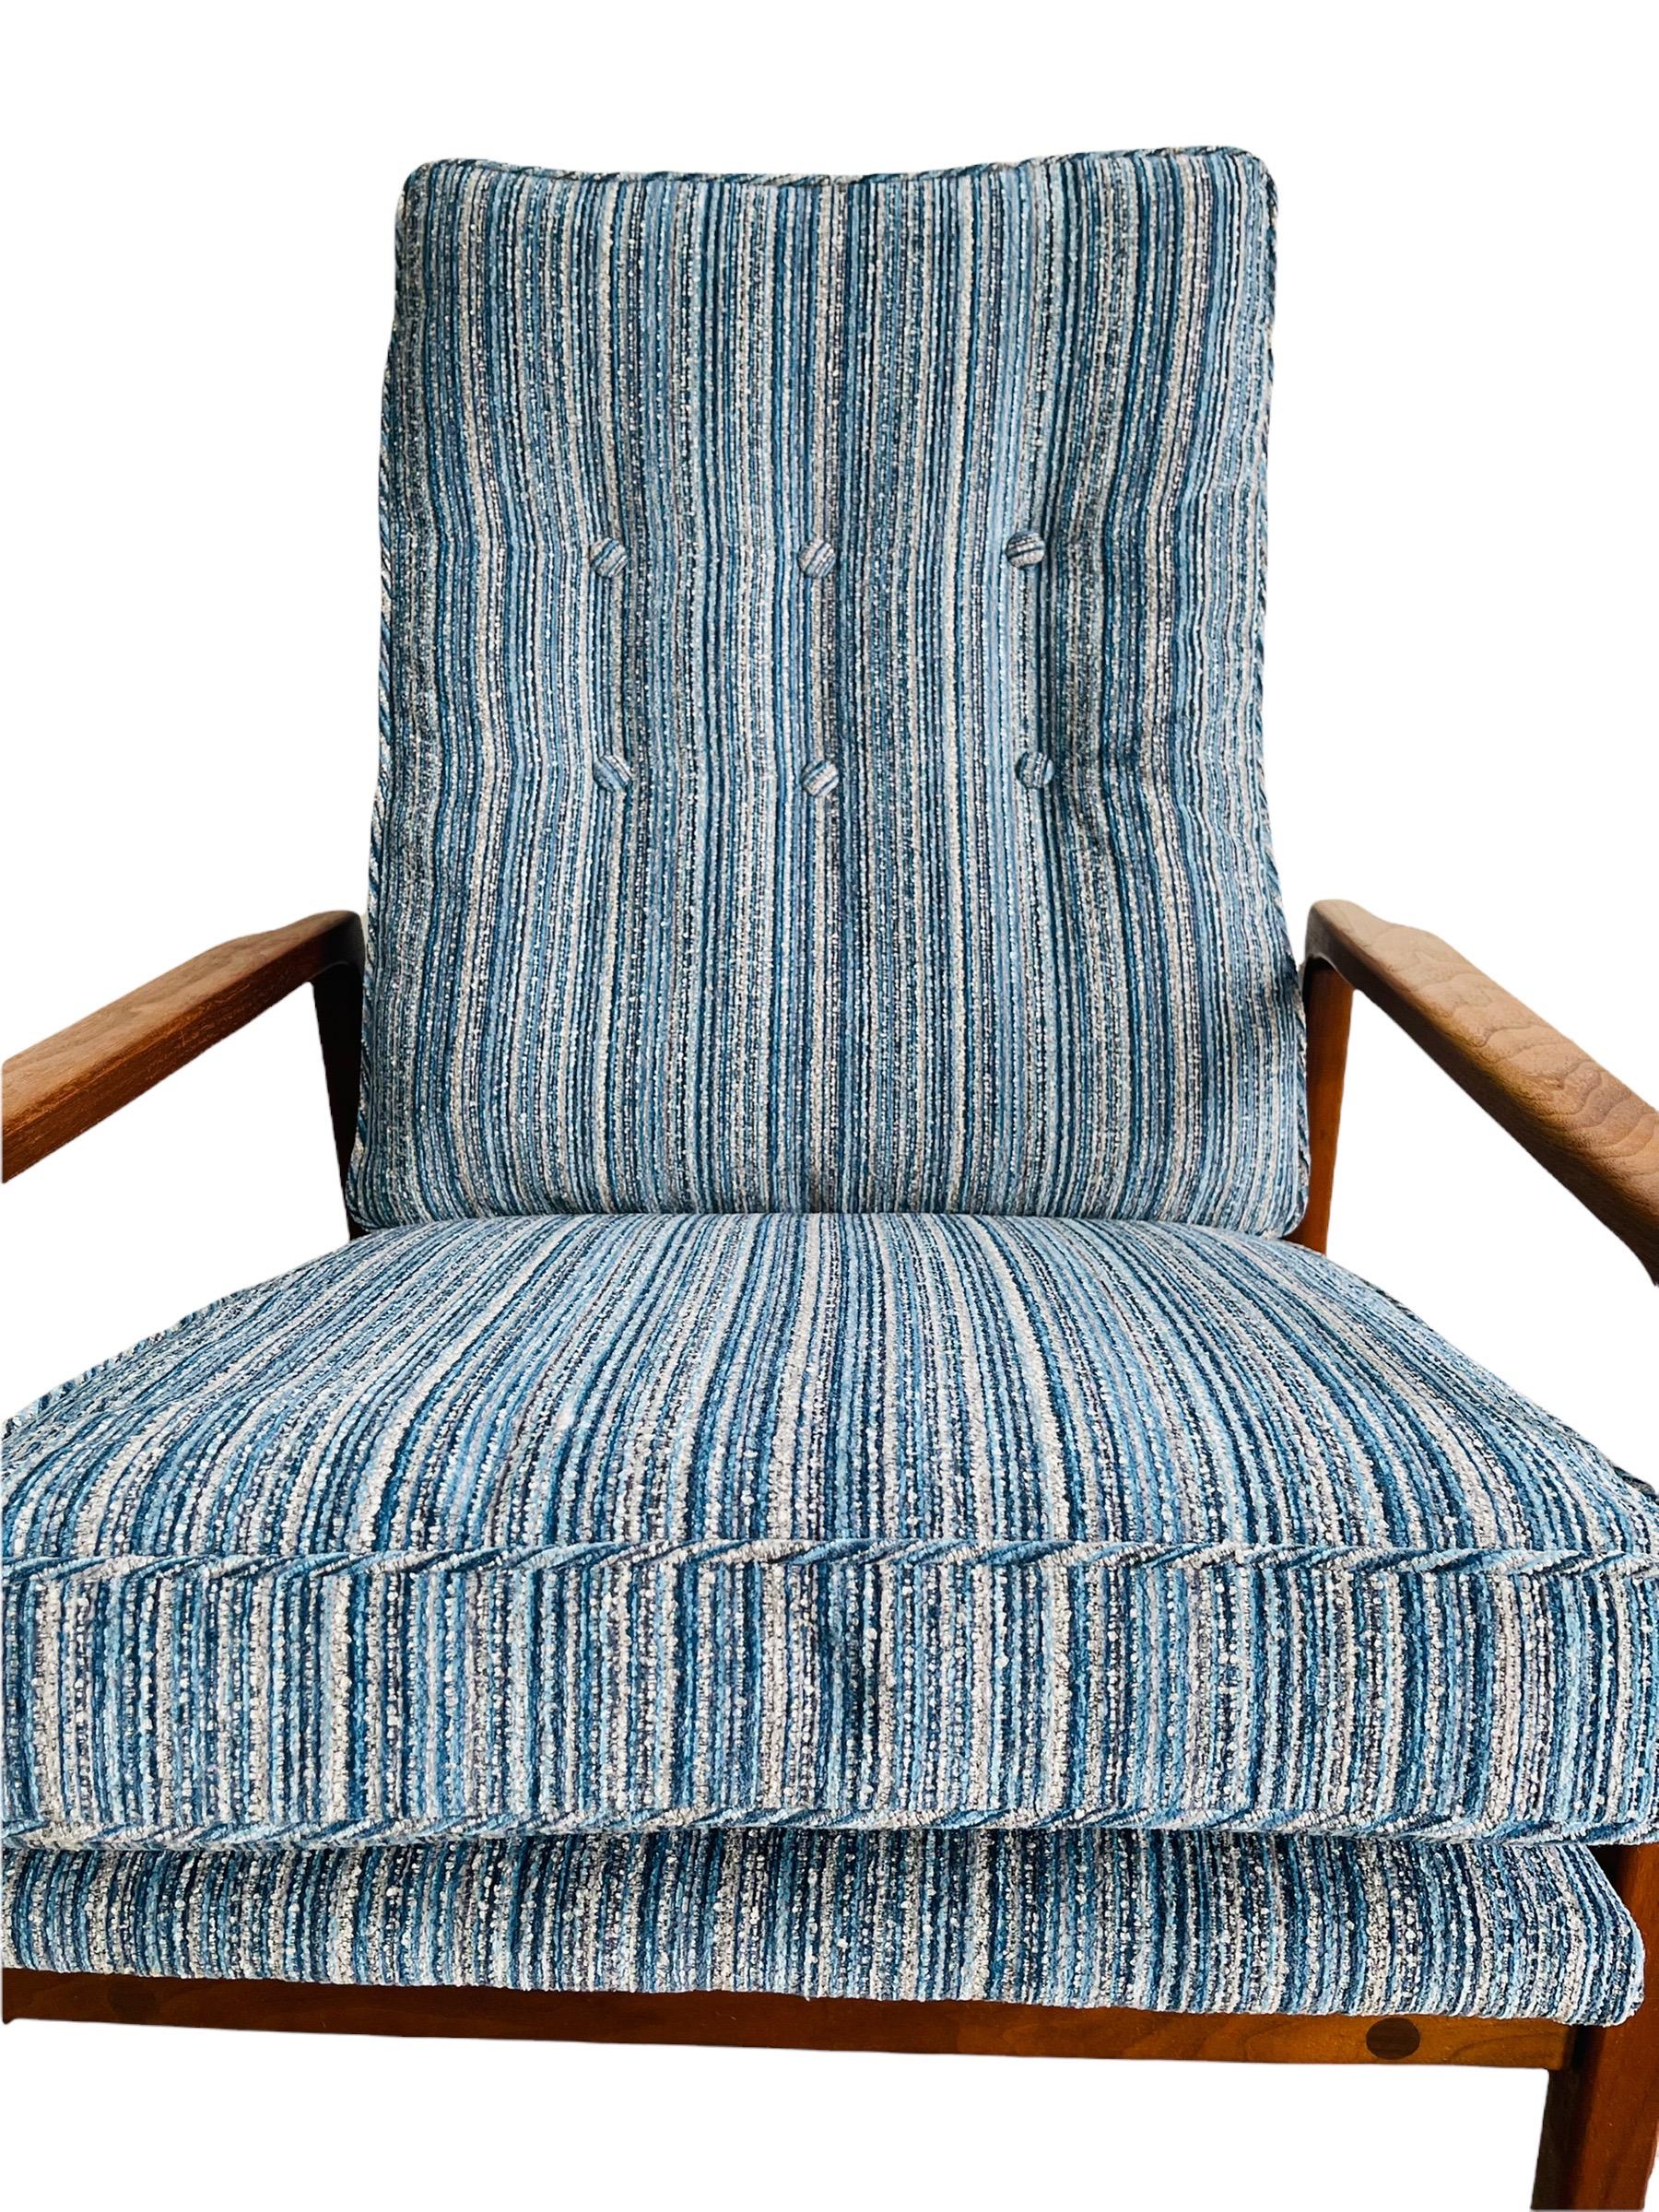 Milo Baughman Reclining Lounge Chair & Ottoman for James Inc 6